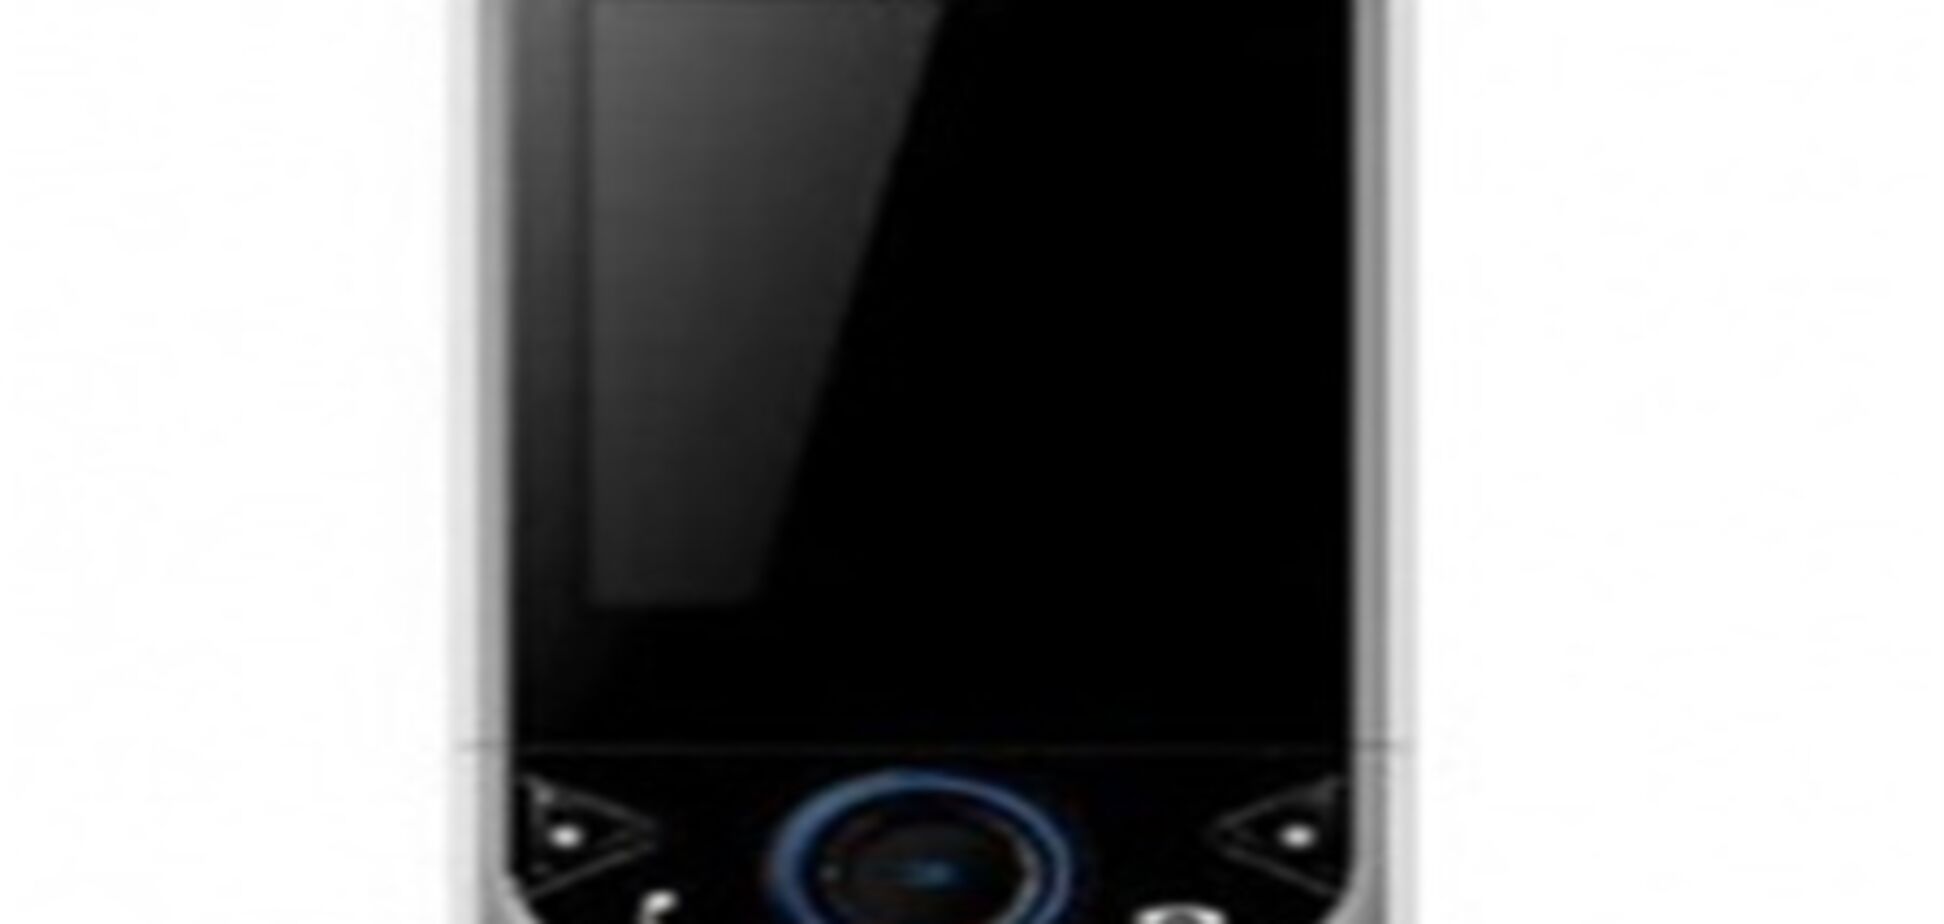 Mobile World Congress 2010: ZTE представила первый ультратонкий 3G-аппарат на базе Qualcomm-платформы Brew